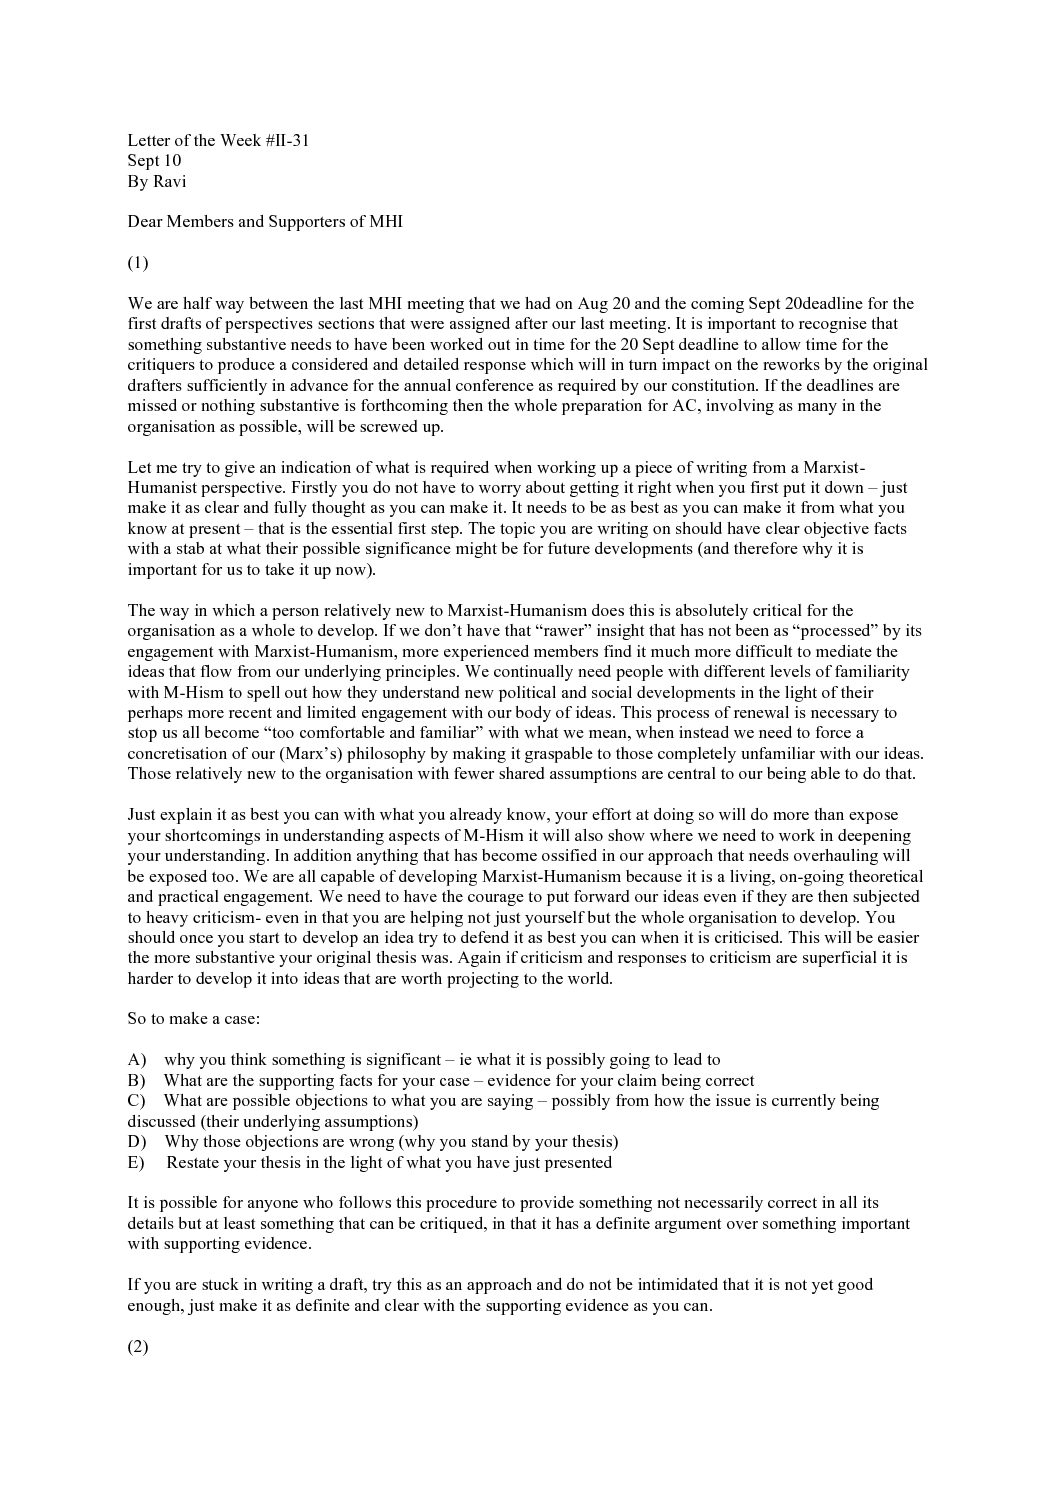 Letter-of-the-Week-II-31-pdf